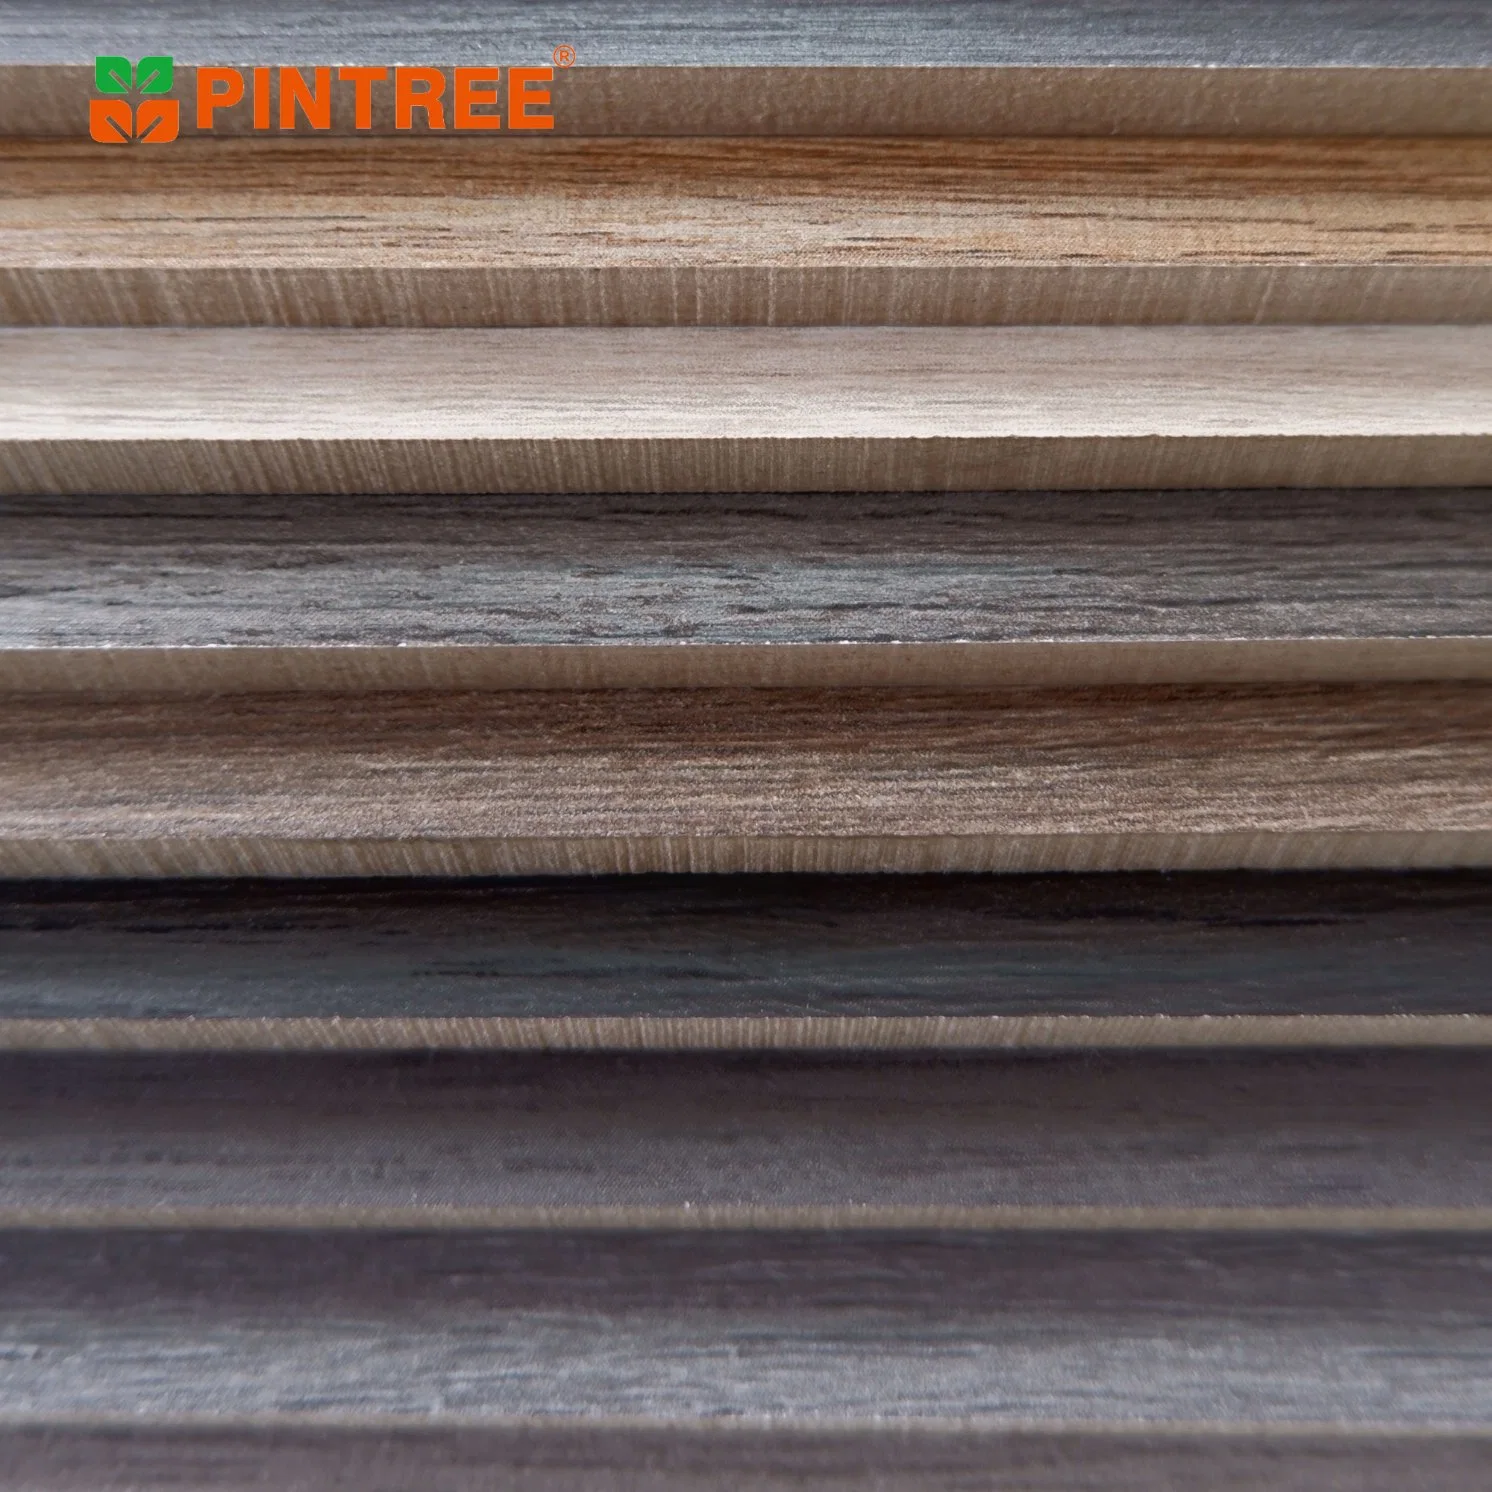 9-25mm Thickness Laminated Hardwood Melamine Plywood Sheet Timber Pine Surface